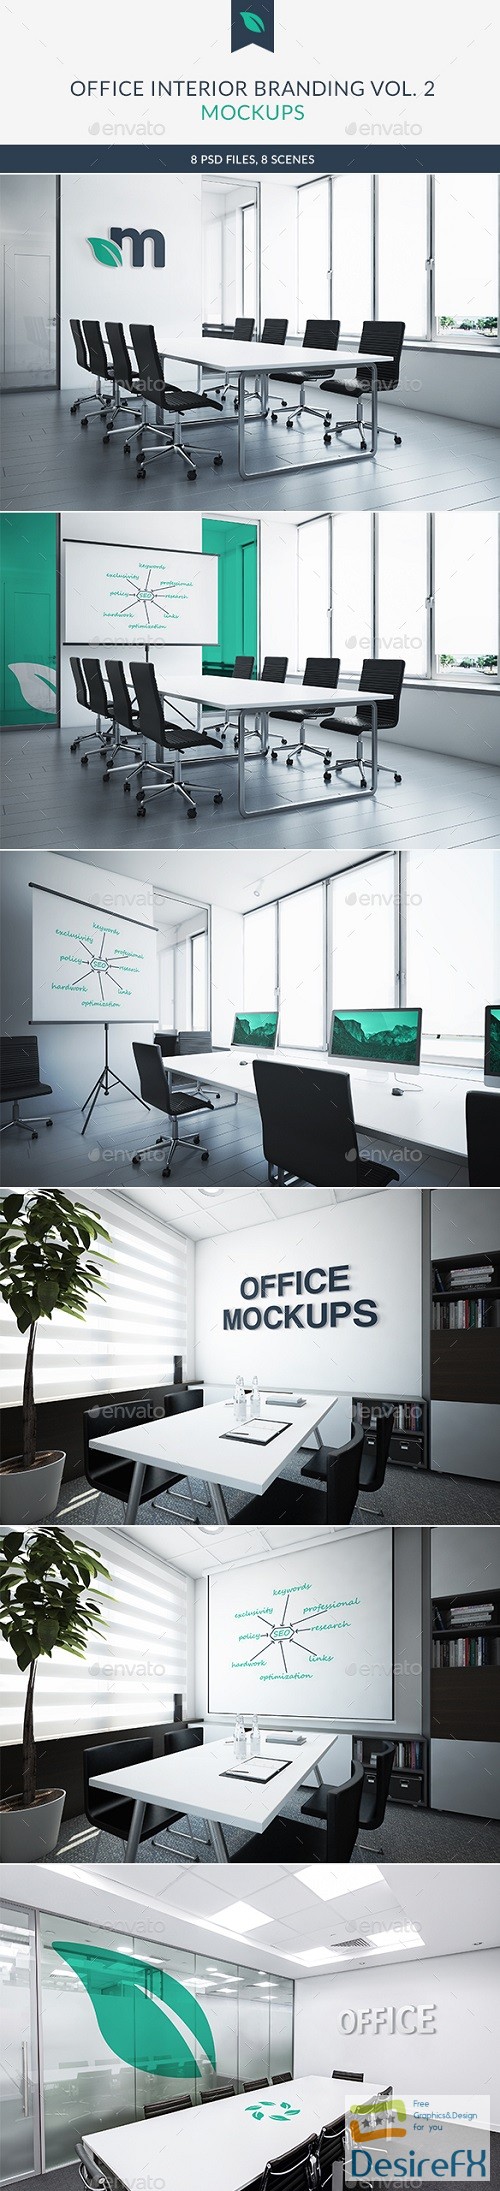 Download Office Interior Branding Mockups Vol2 21486903 - DesireFX.COM